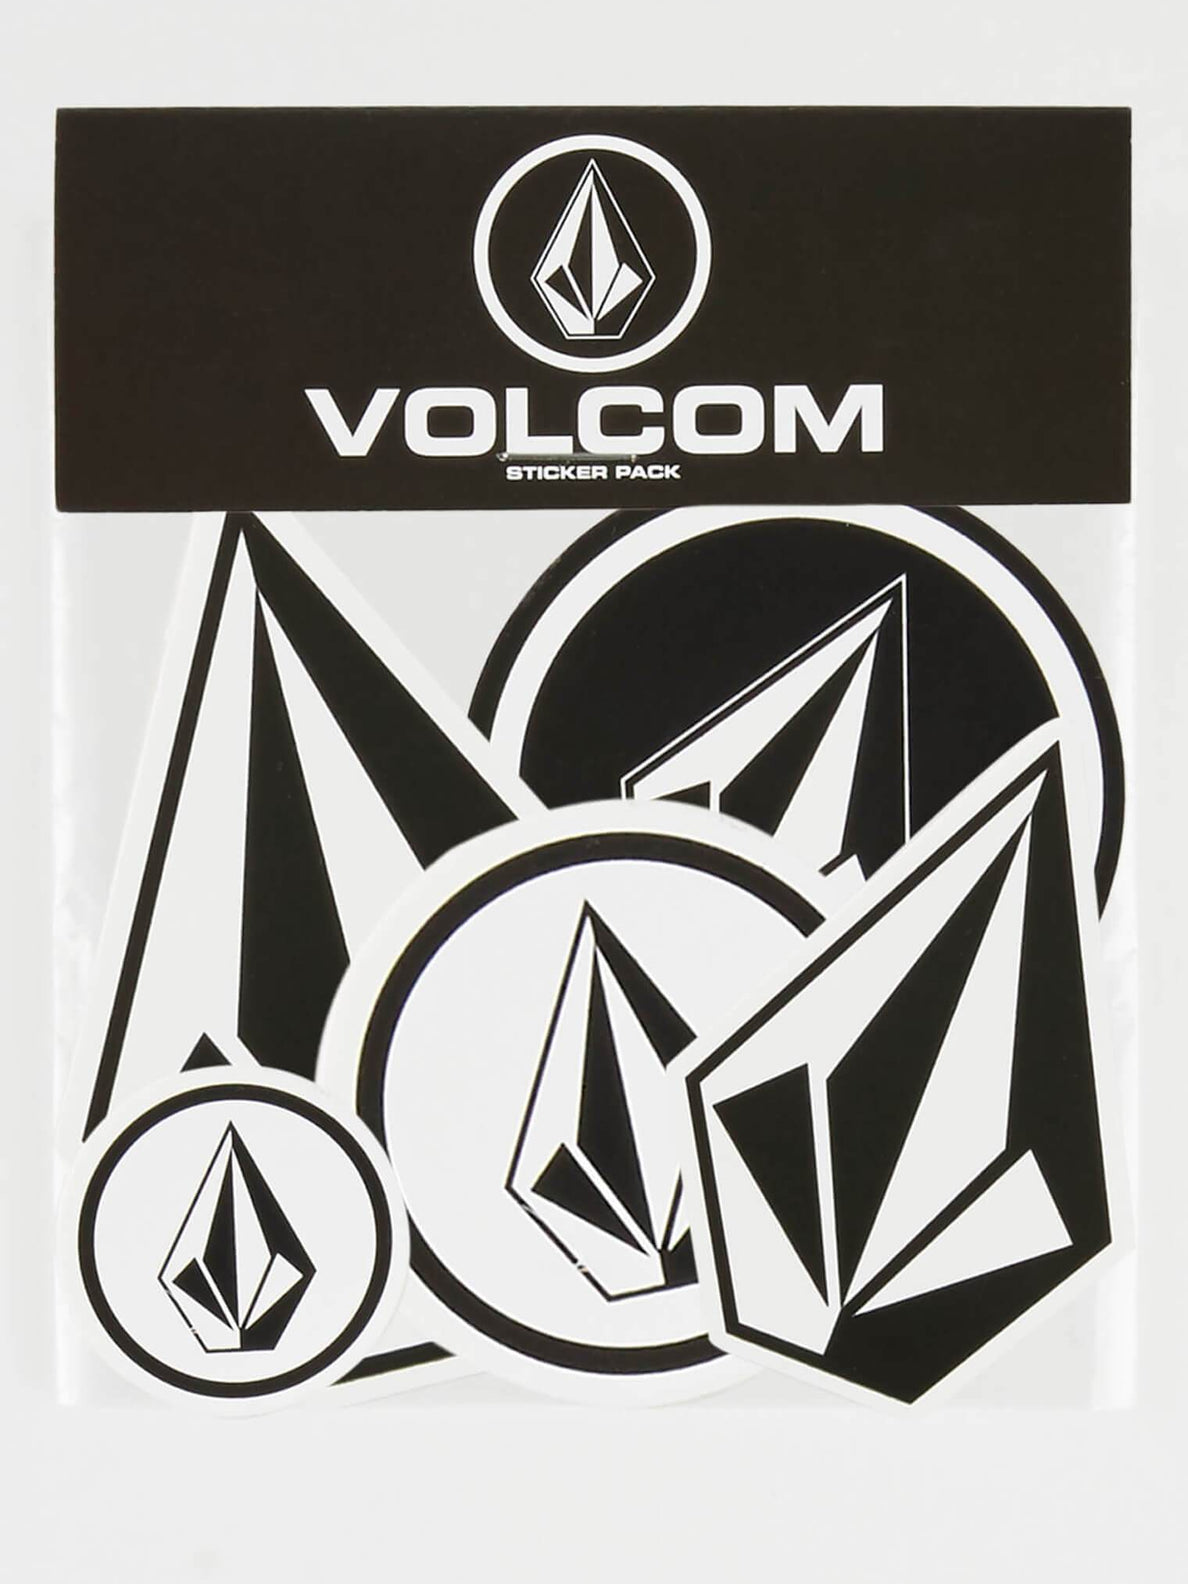 Volcom Sticker Packs (5) Sticker Pack